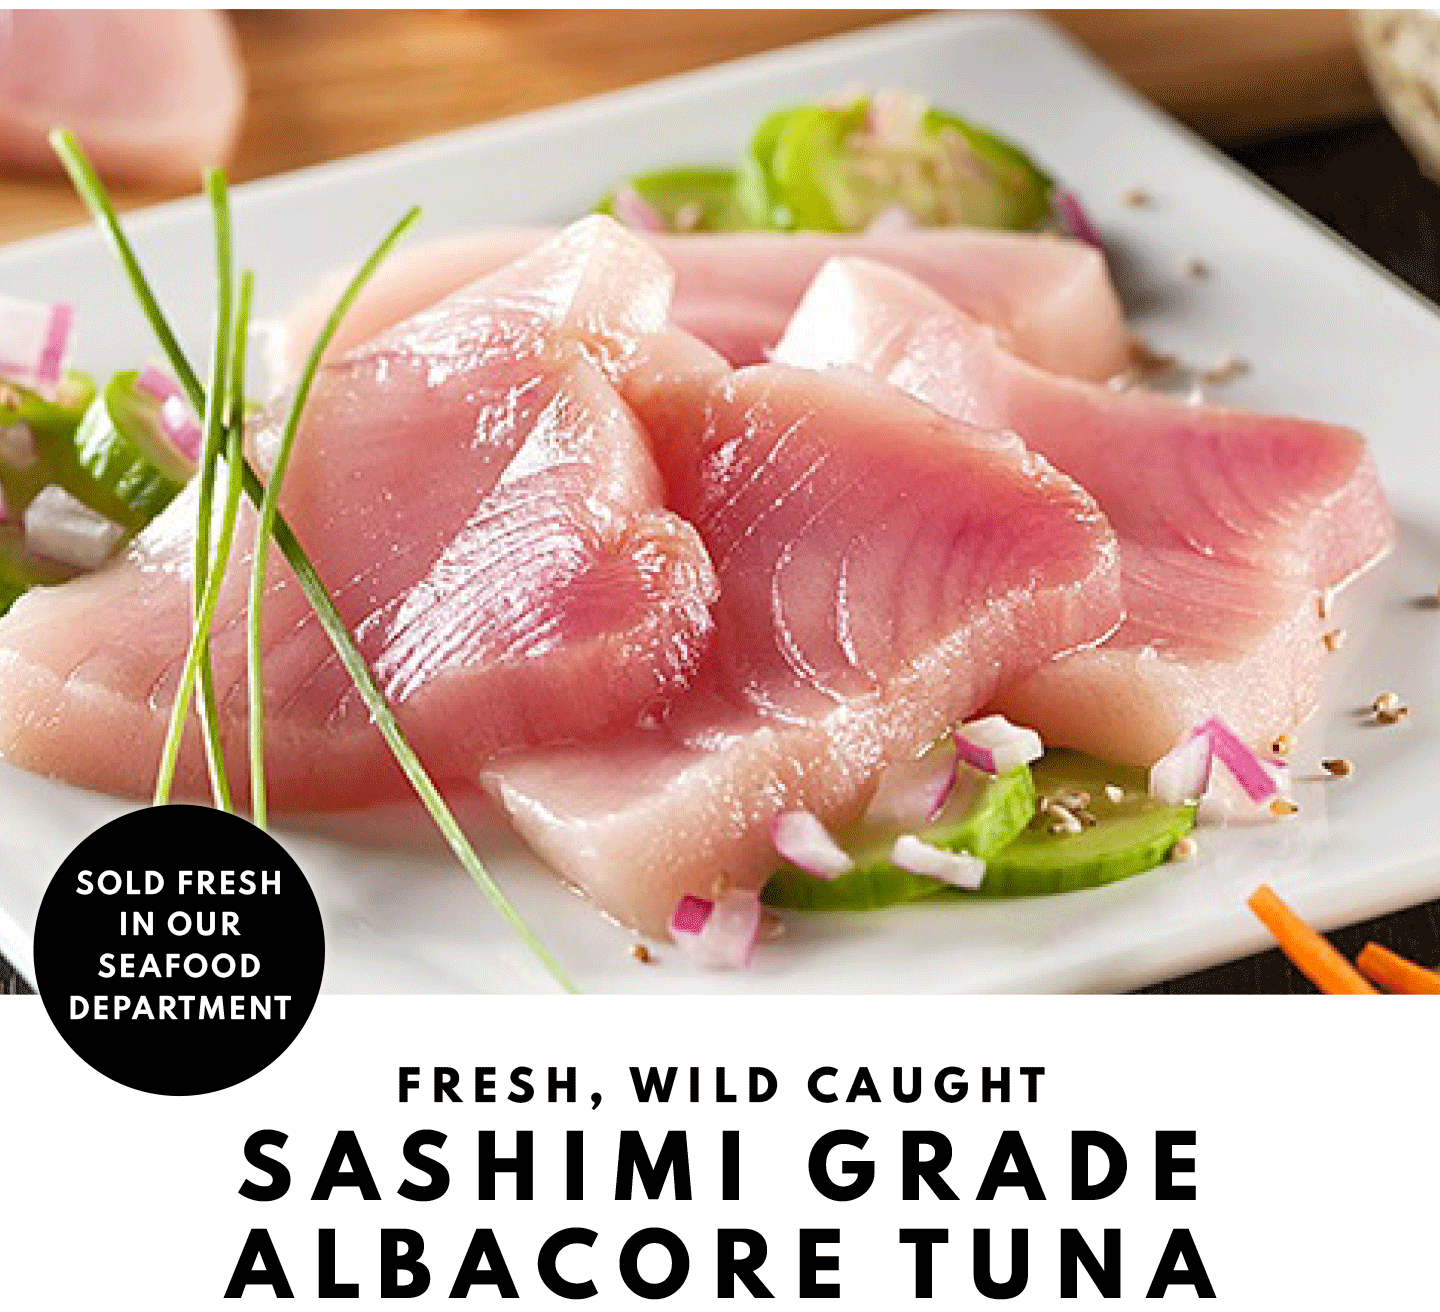 Sashimi Grde Albacore Tuna $19.99 lb